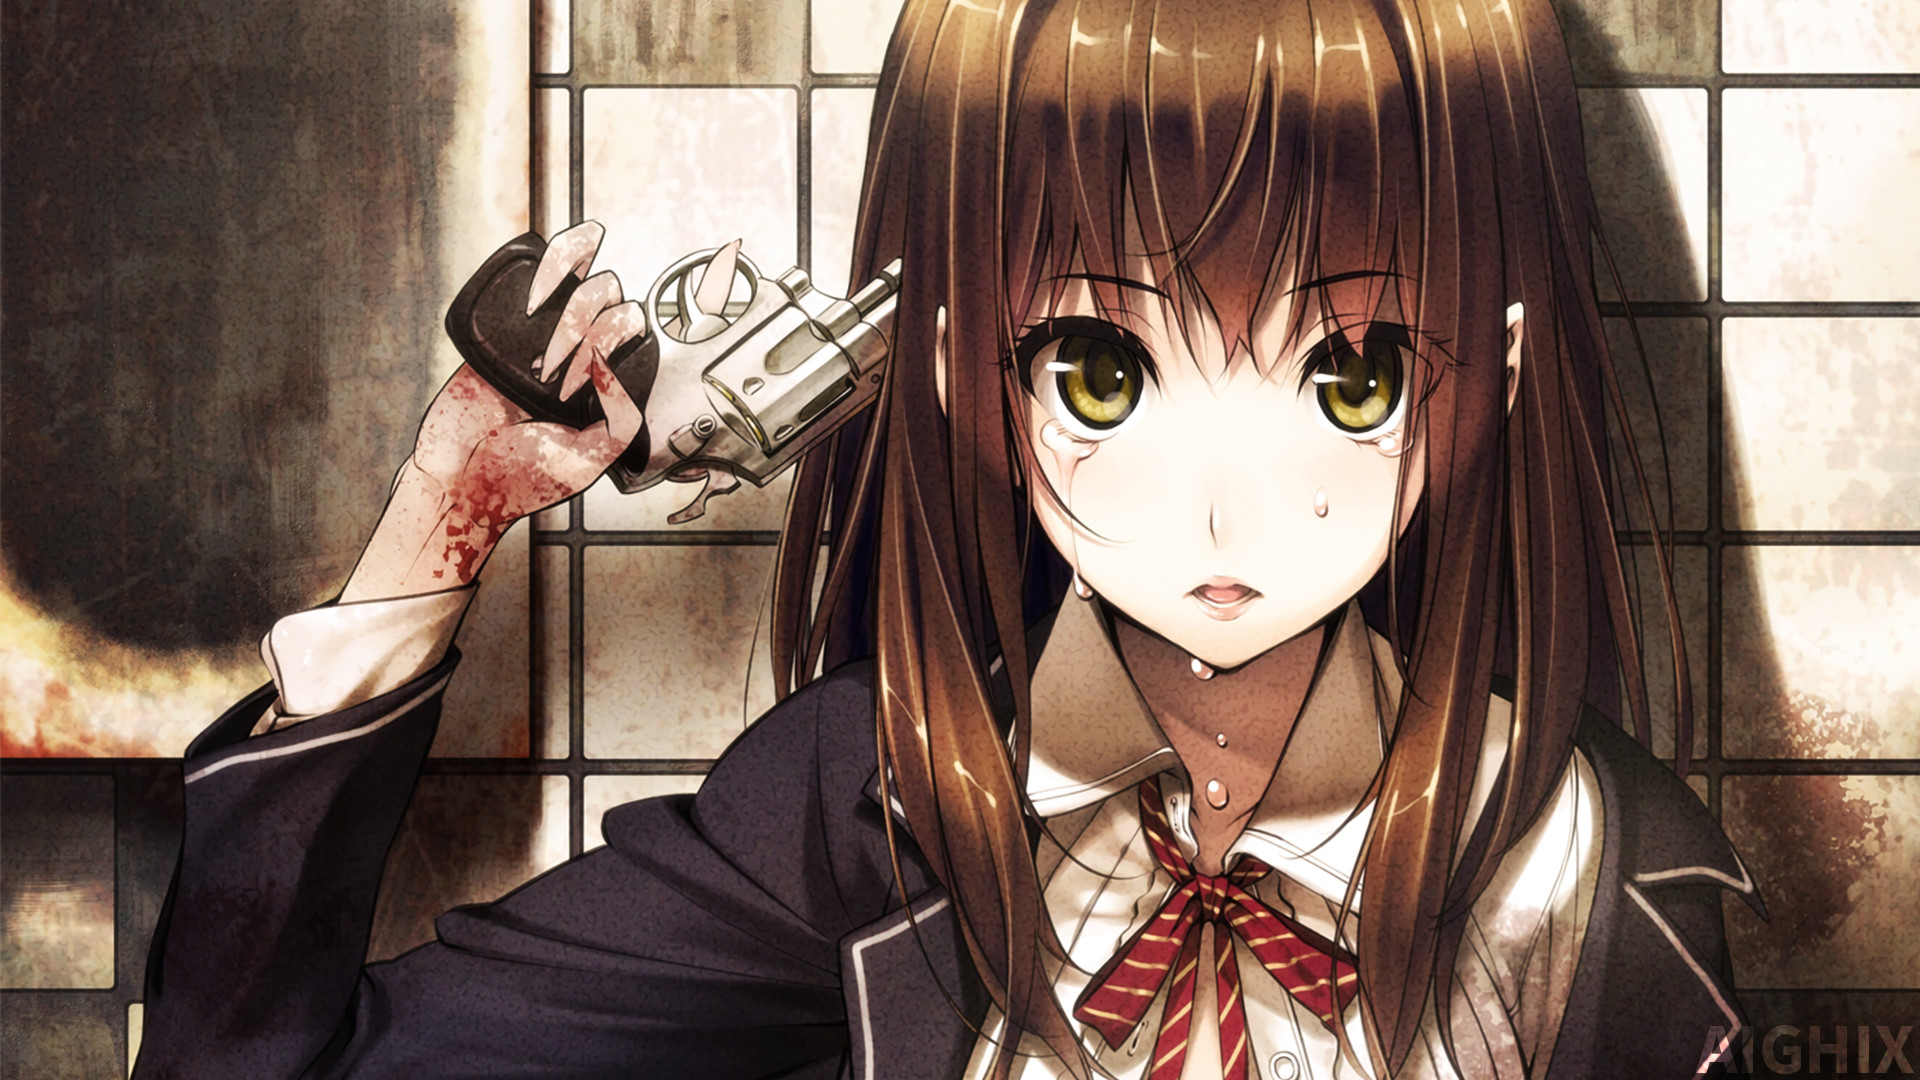 Sad Anime Girl With Gun Wallpaper by AIGHIX